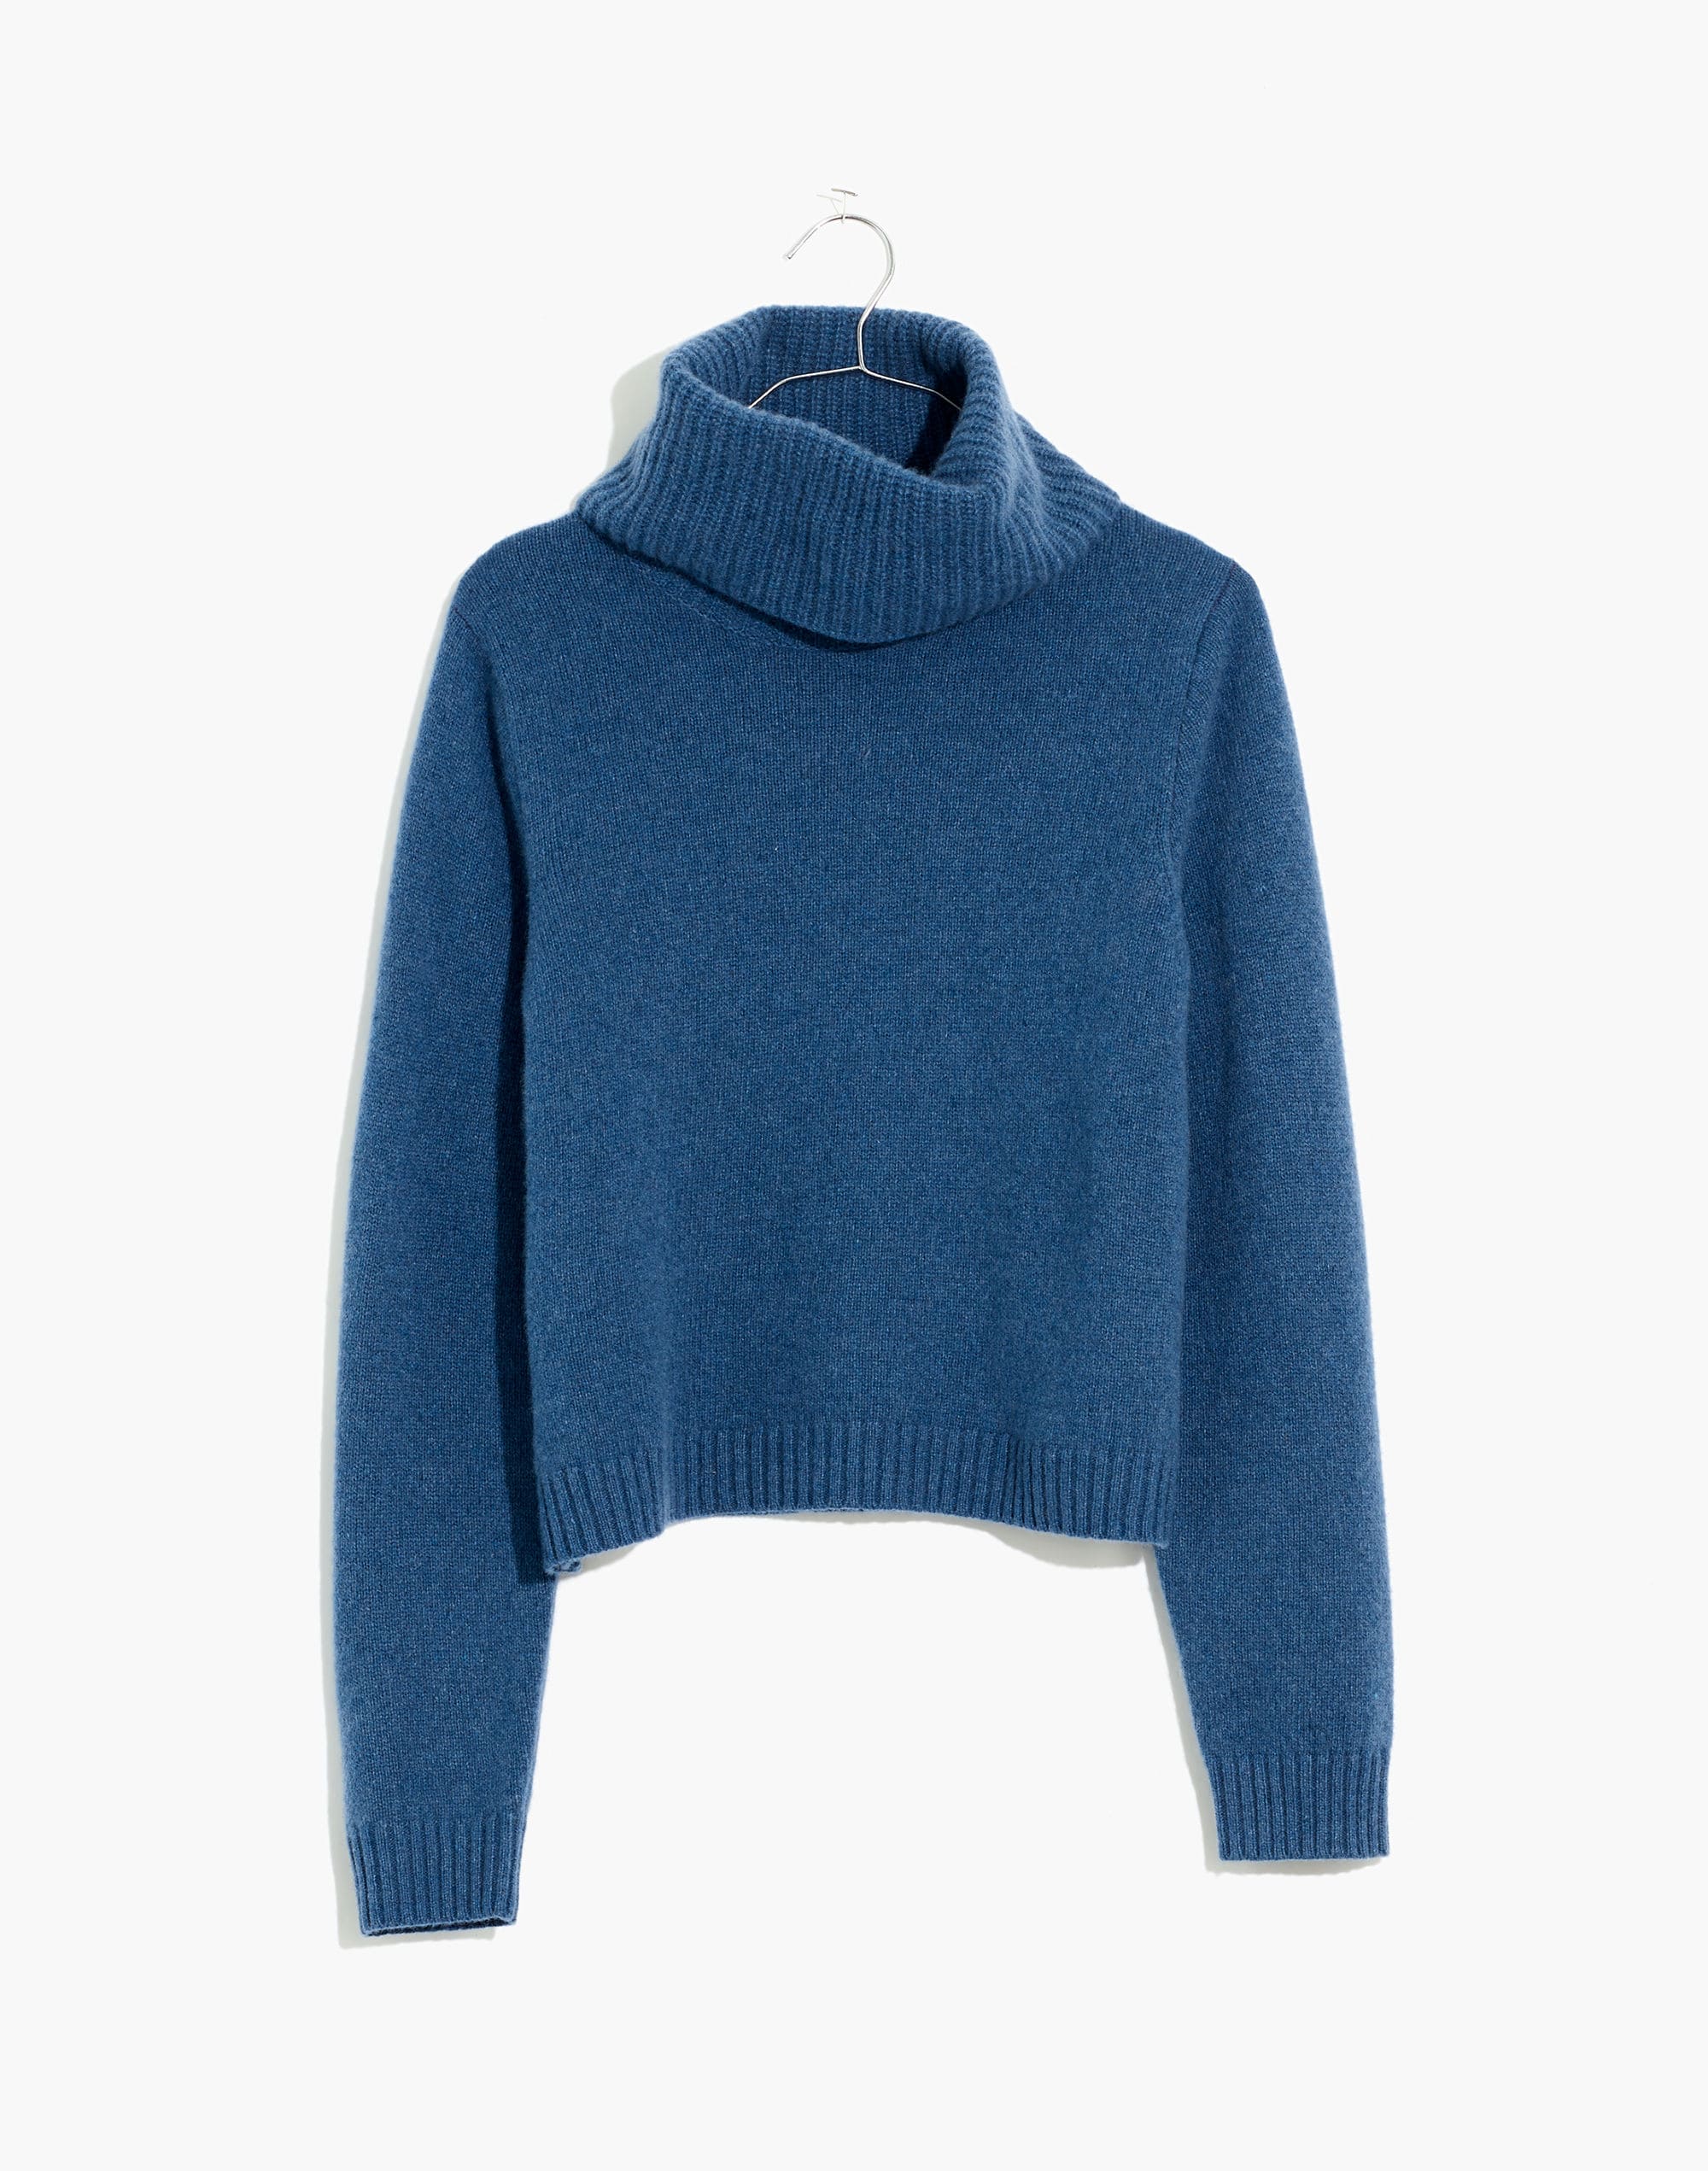 (Re)sourced Cashmere Crop Turtleneck Sweater